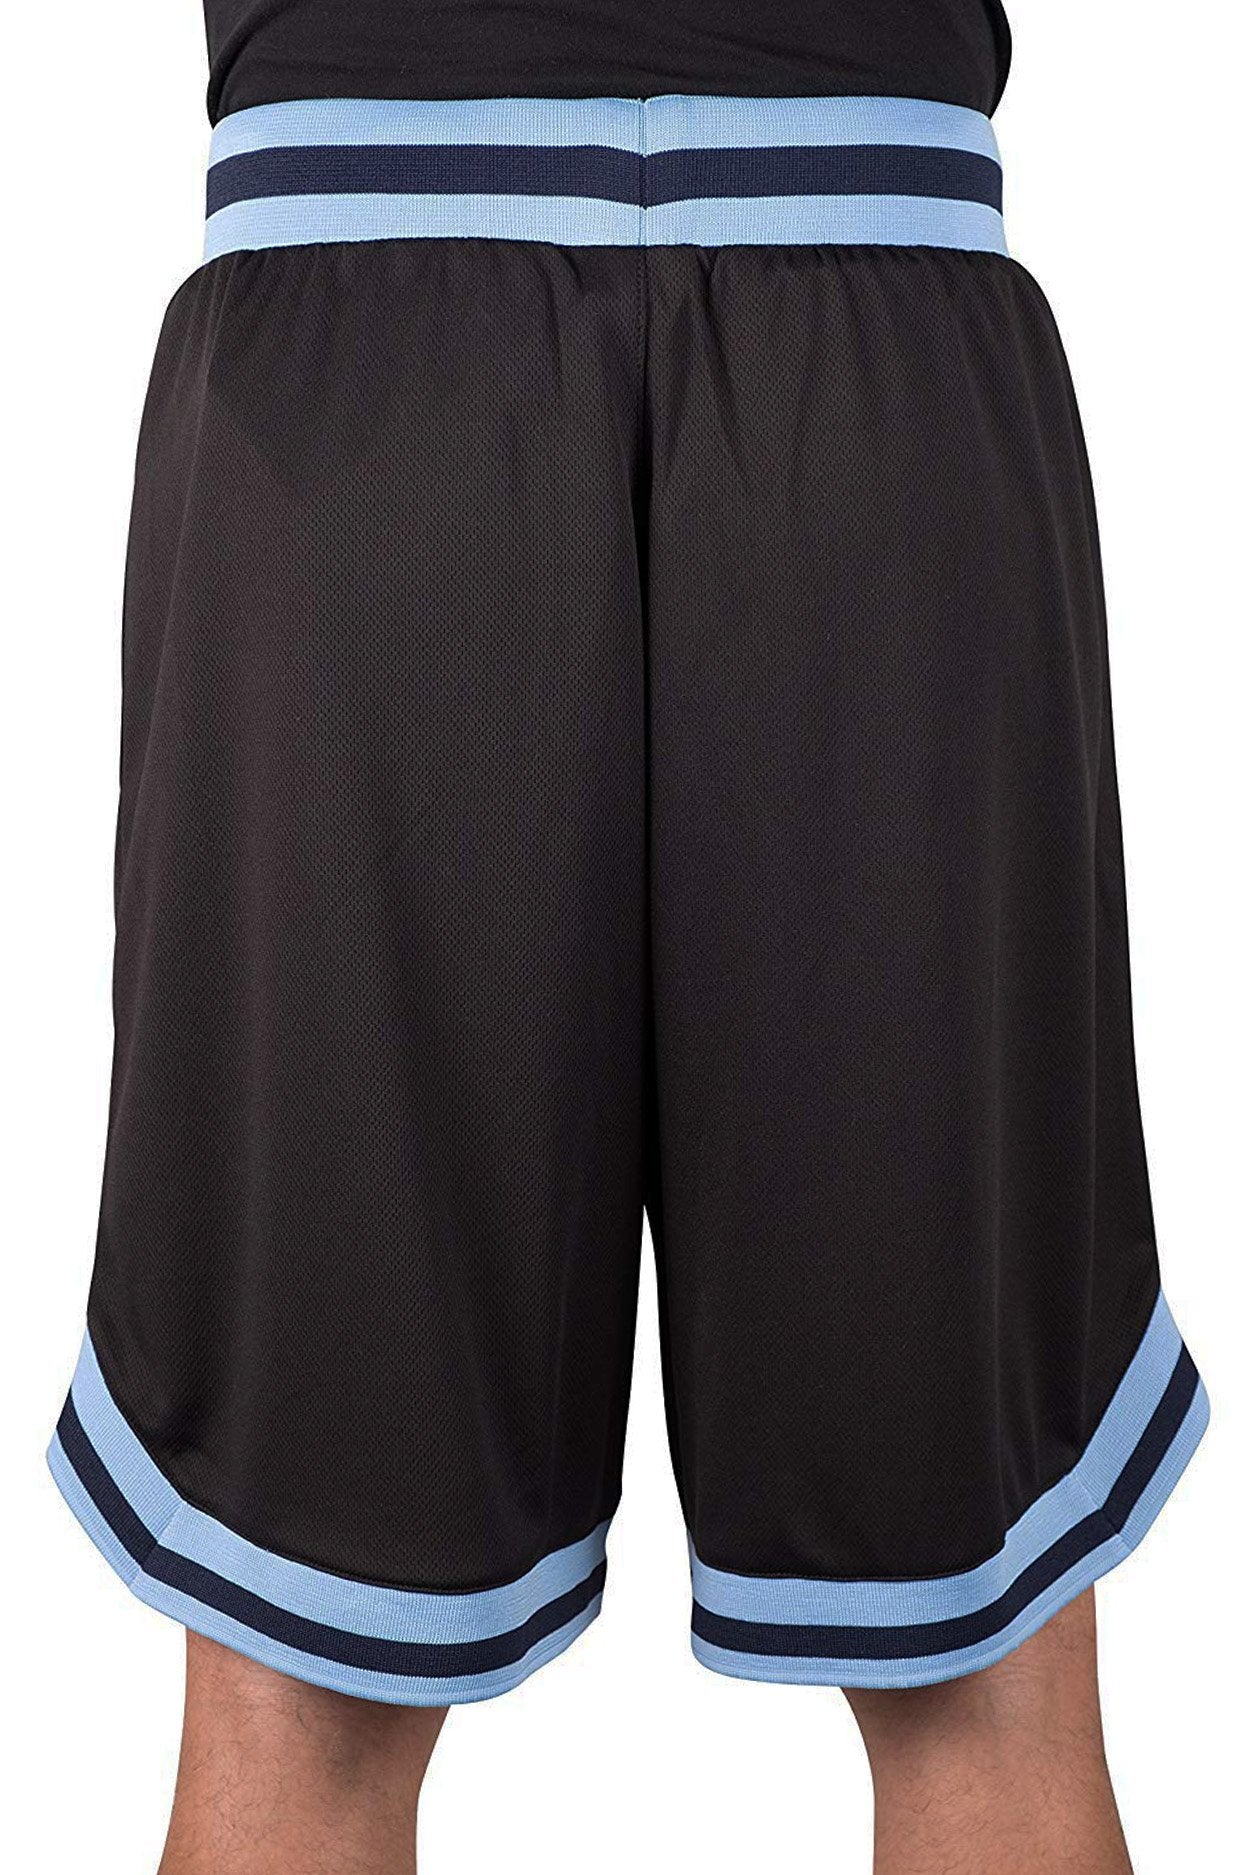 NBA Memphis Grizzlies Men's Basketball Shorts|Memphis Grizzlies